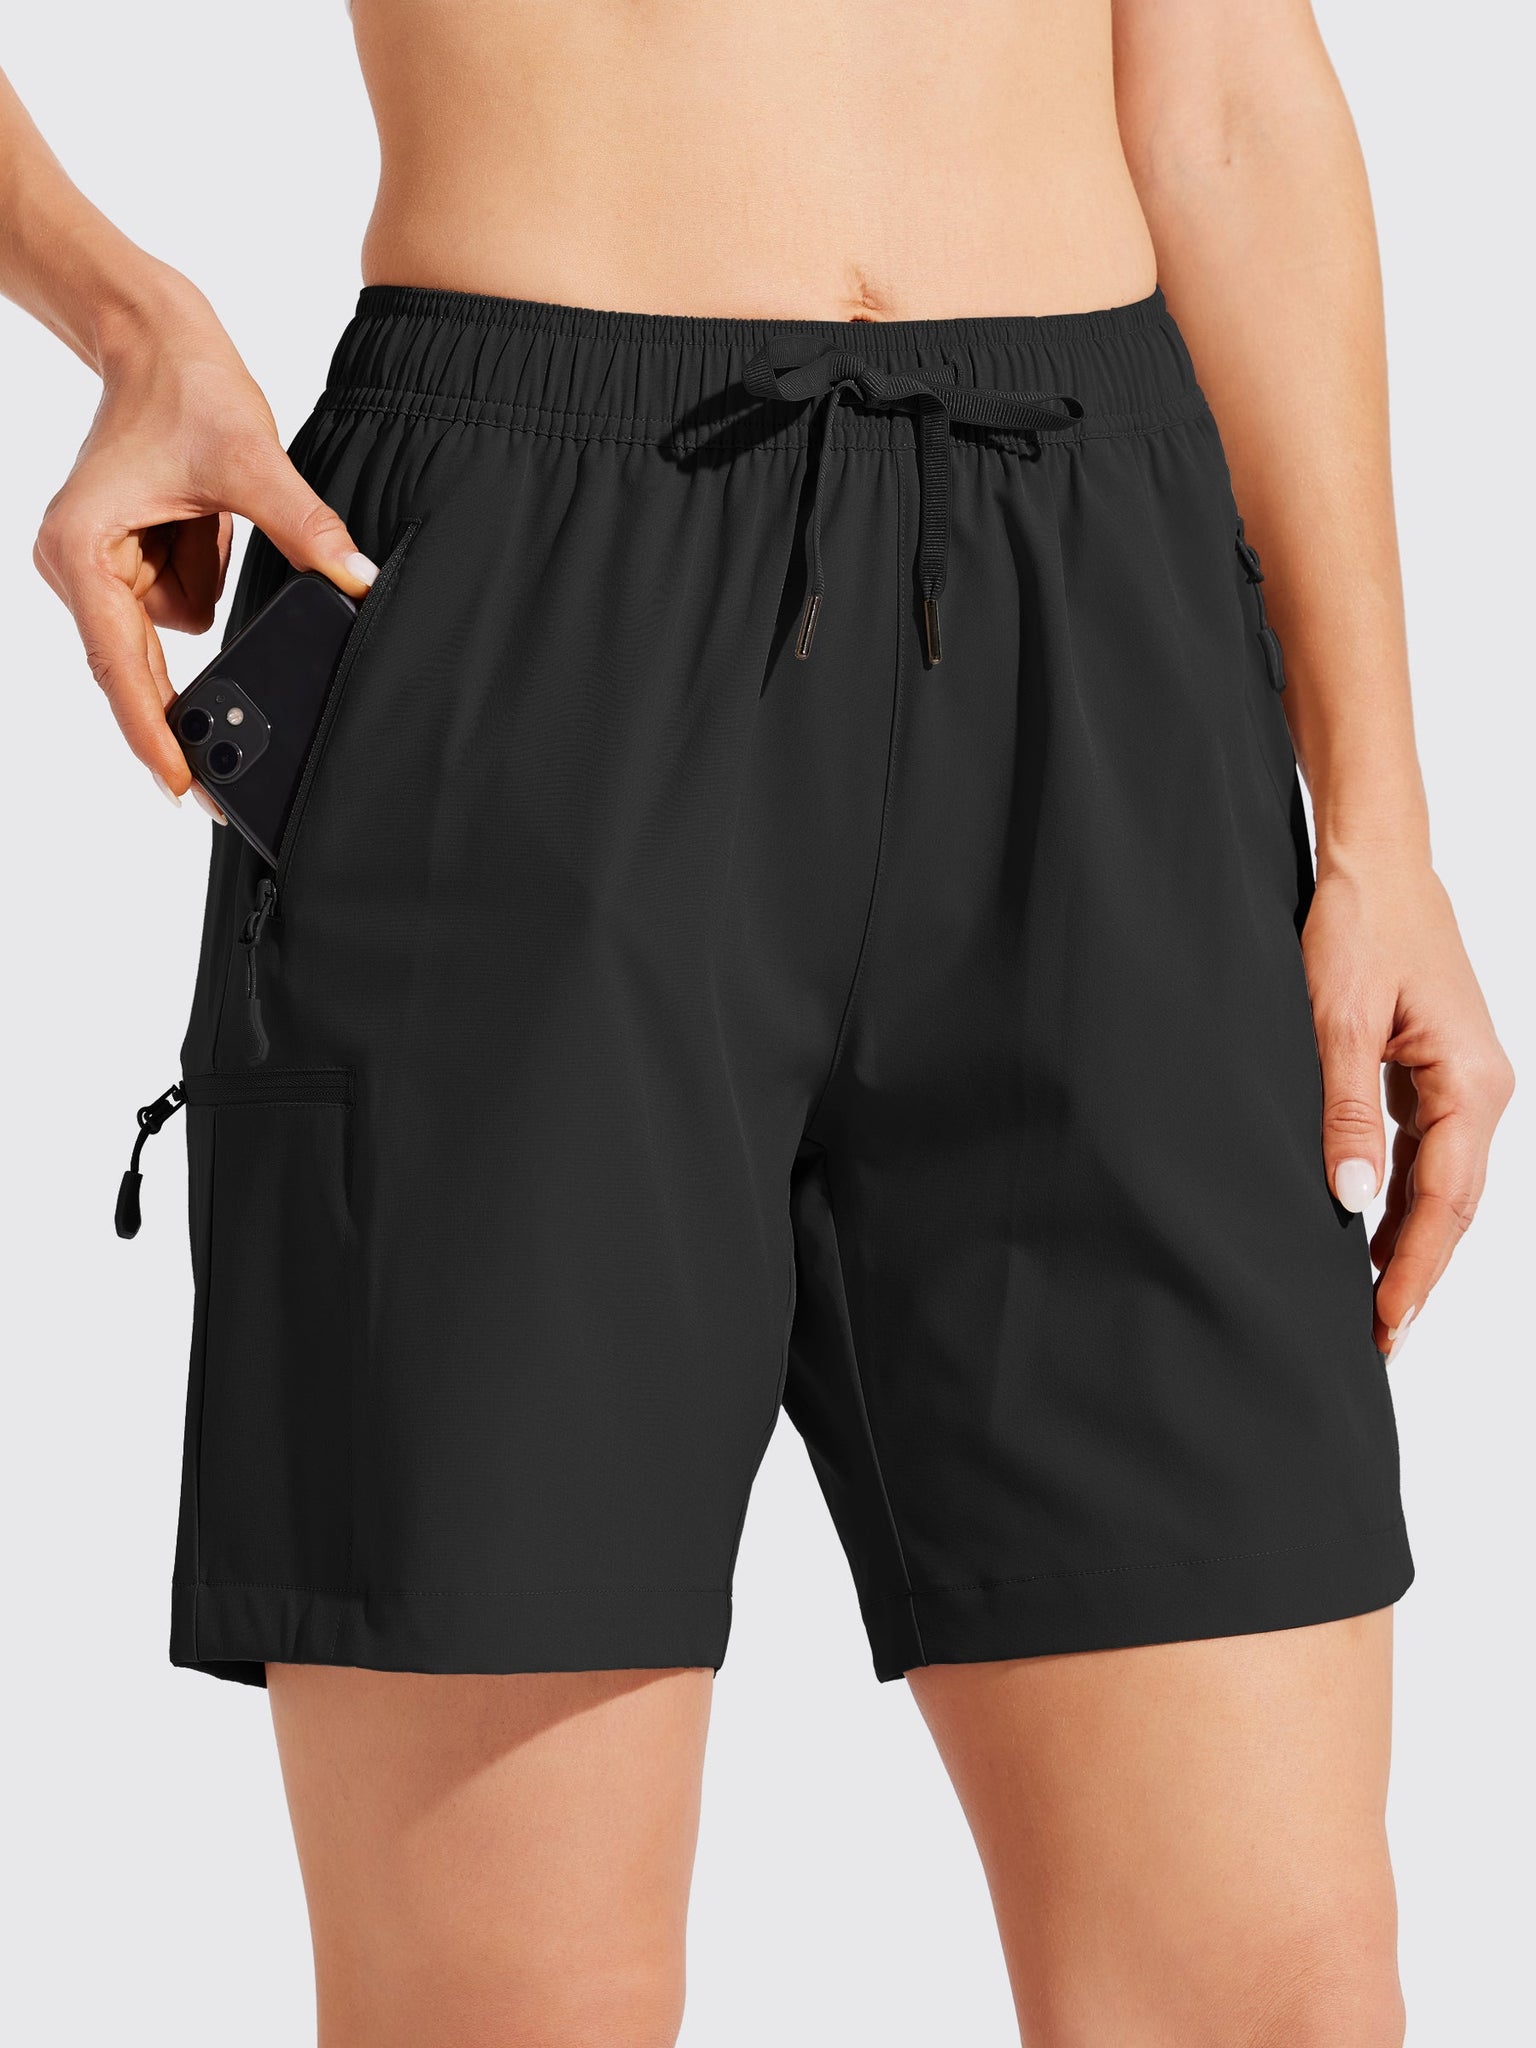 Women's Hiking Athletic Shorts_Black1